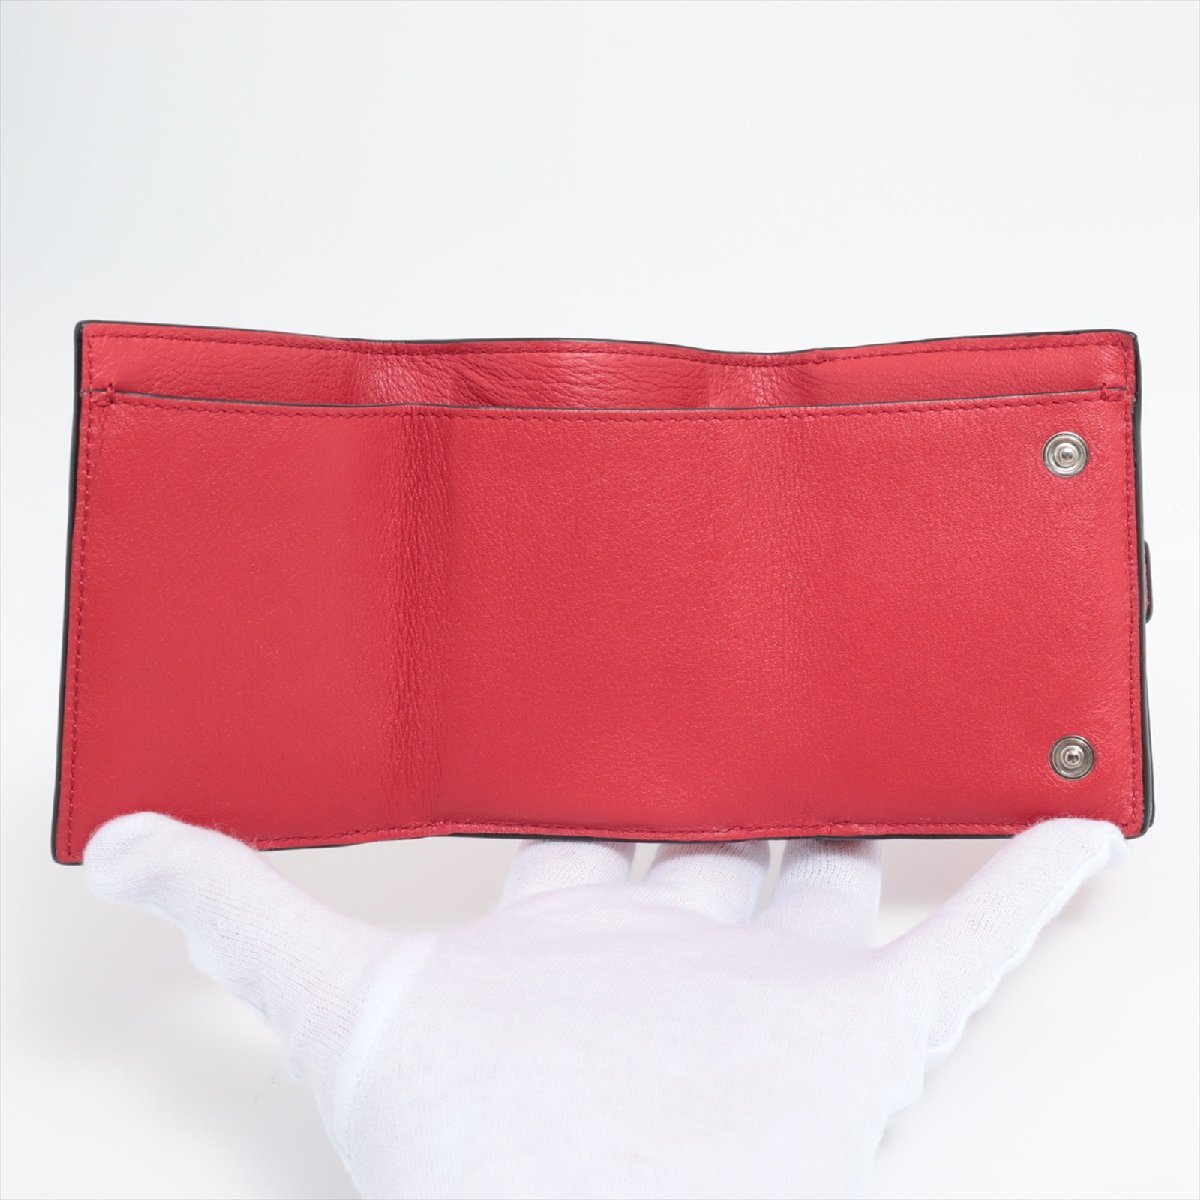 1 jpy # ultimate beautiful goods # present type # Loewe # hole gram # Try folding wallet # leather three folding purse pink stylish lady's TTT 0912-T69